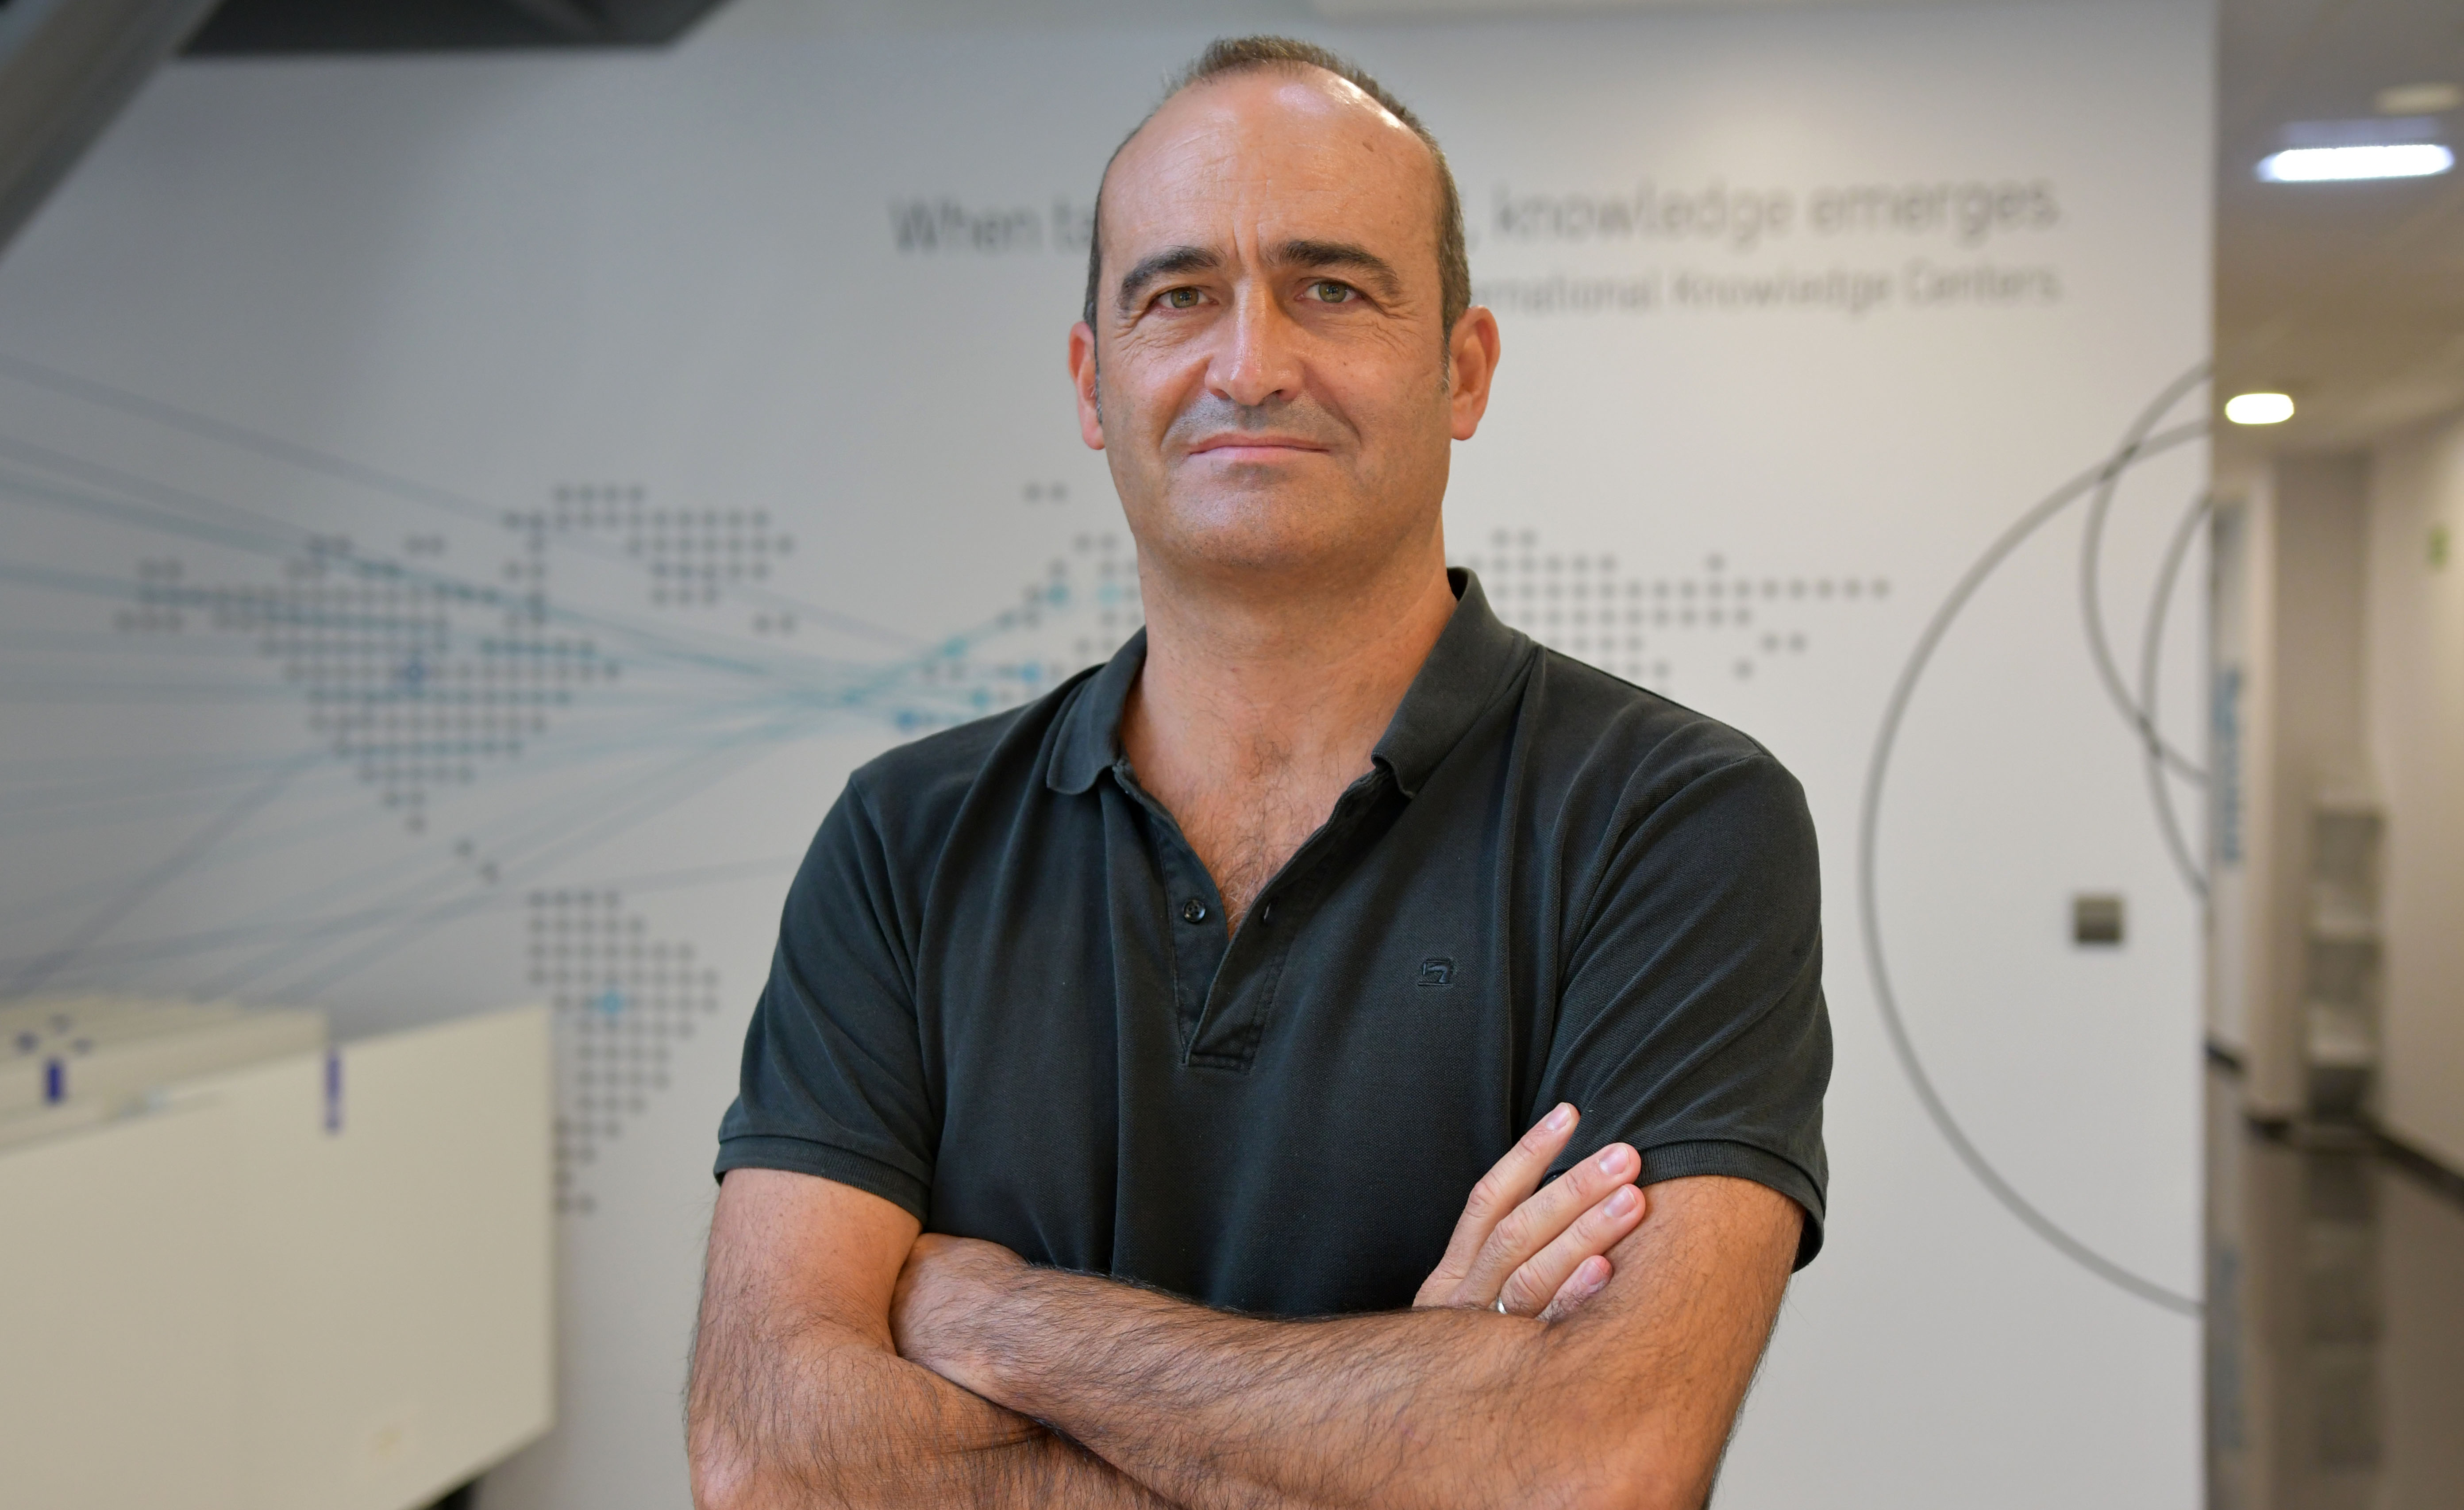 IDEKO researcher David Barrenetxea, elected as a permanent member of the main international forum on industrial manufacturing